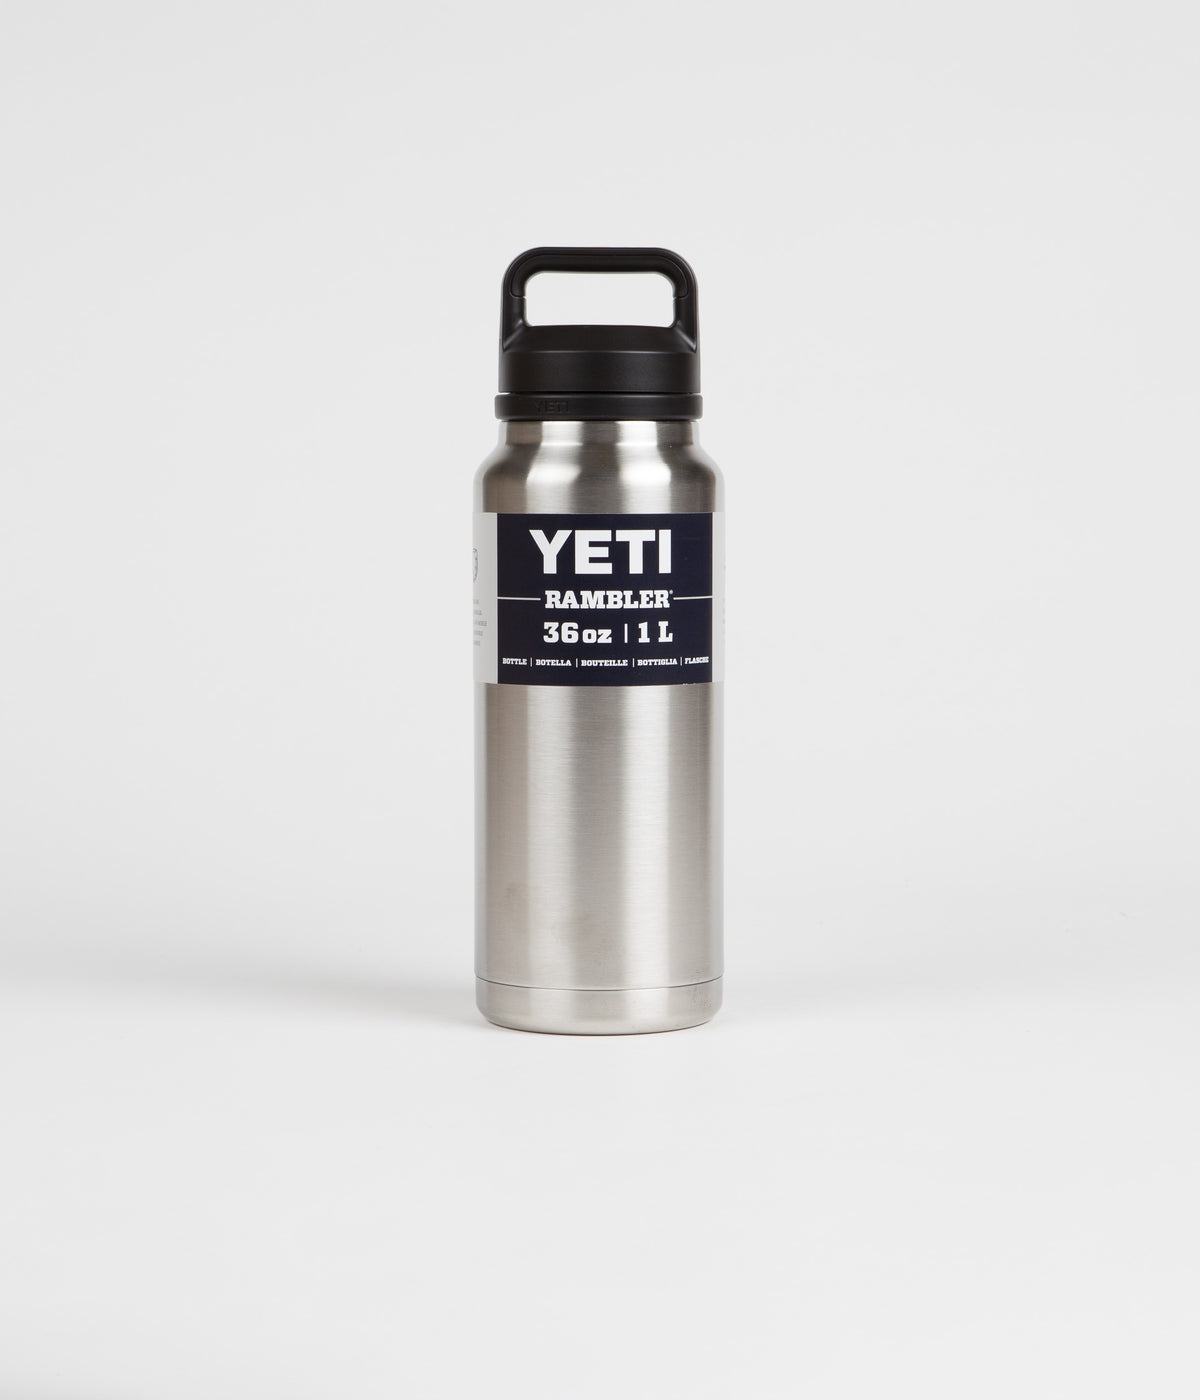 YETI Stainless Steel Rambler Water Bottle, 36 oz